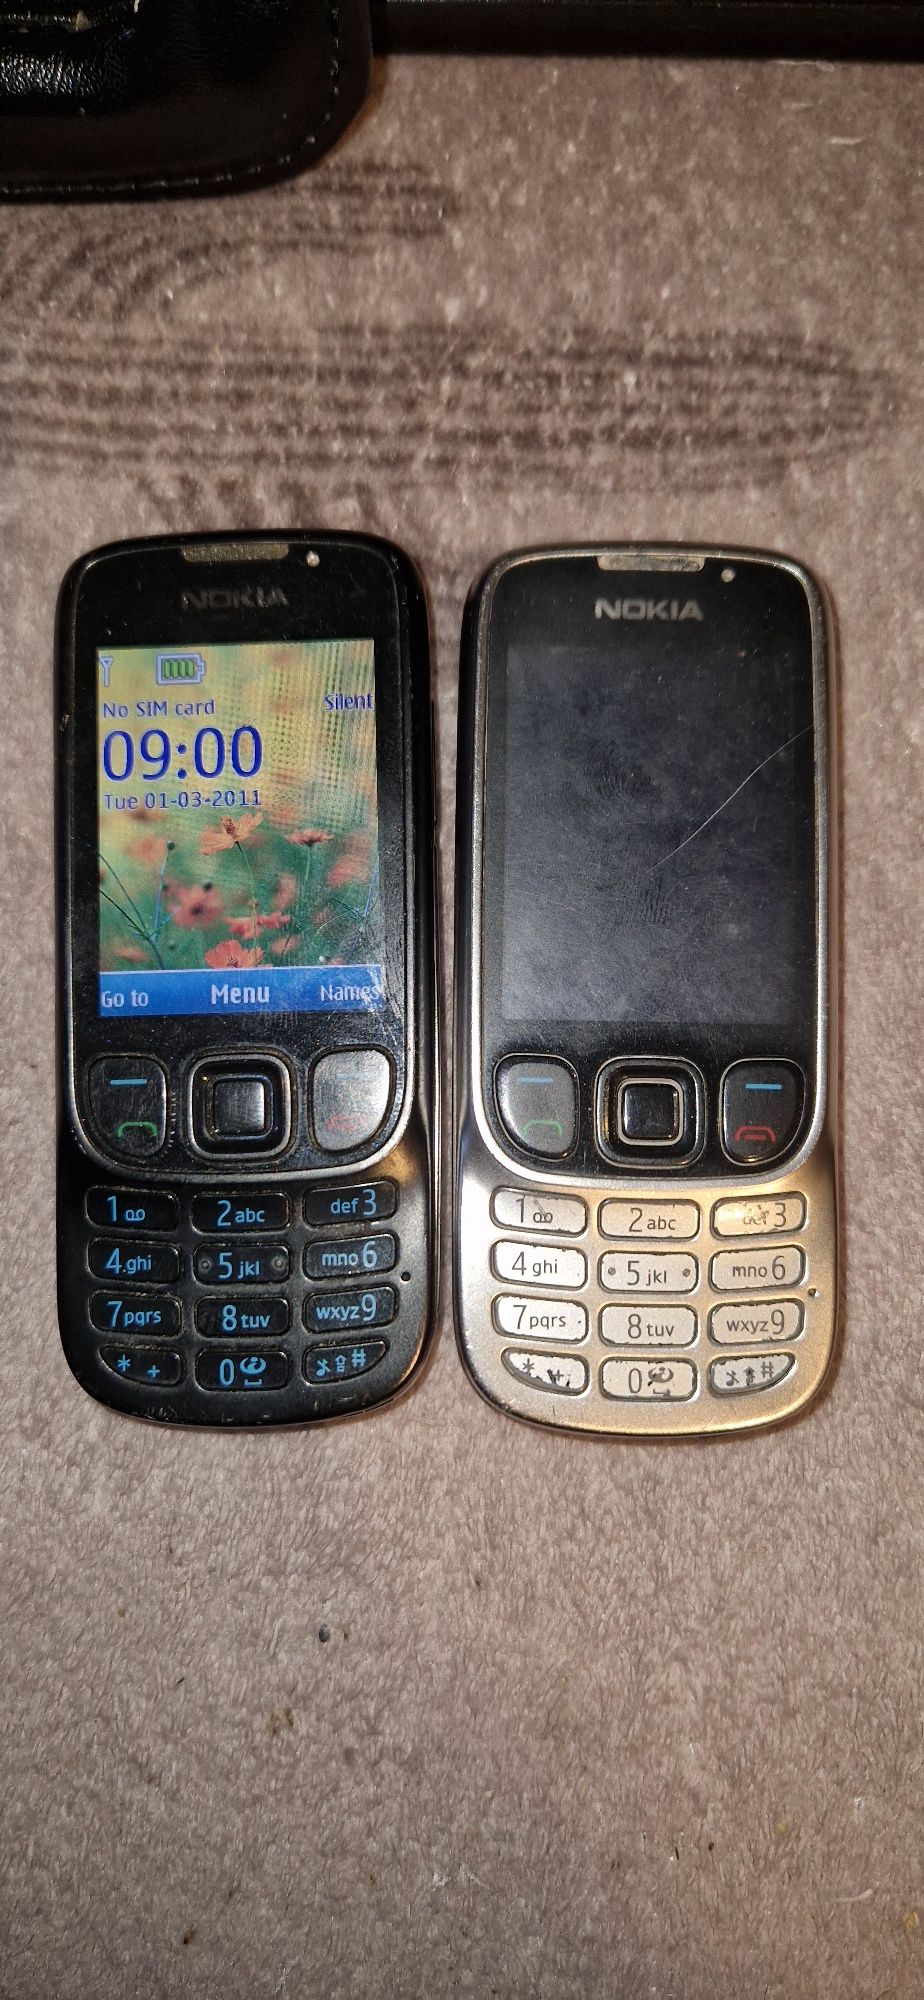 Nokia 6300 funcționale